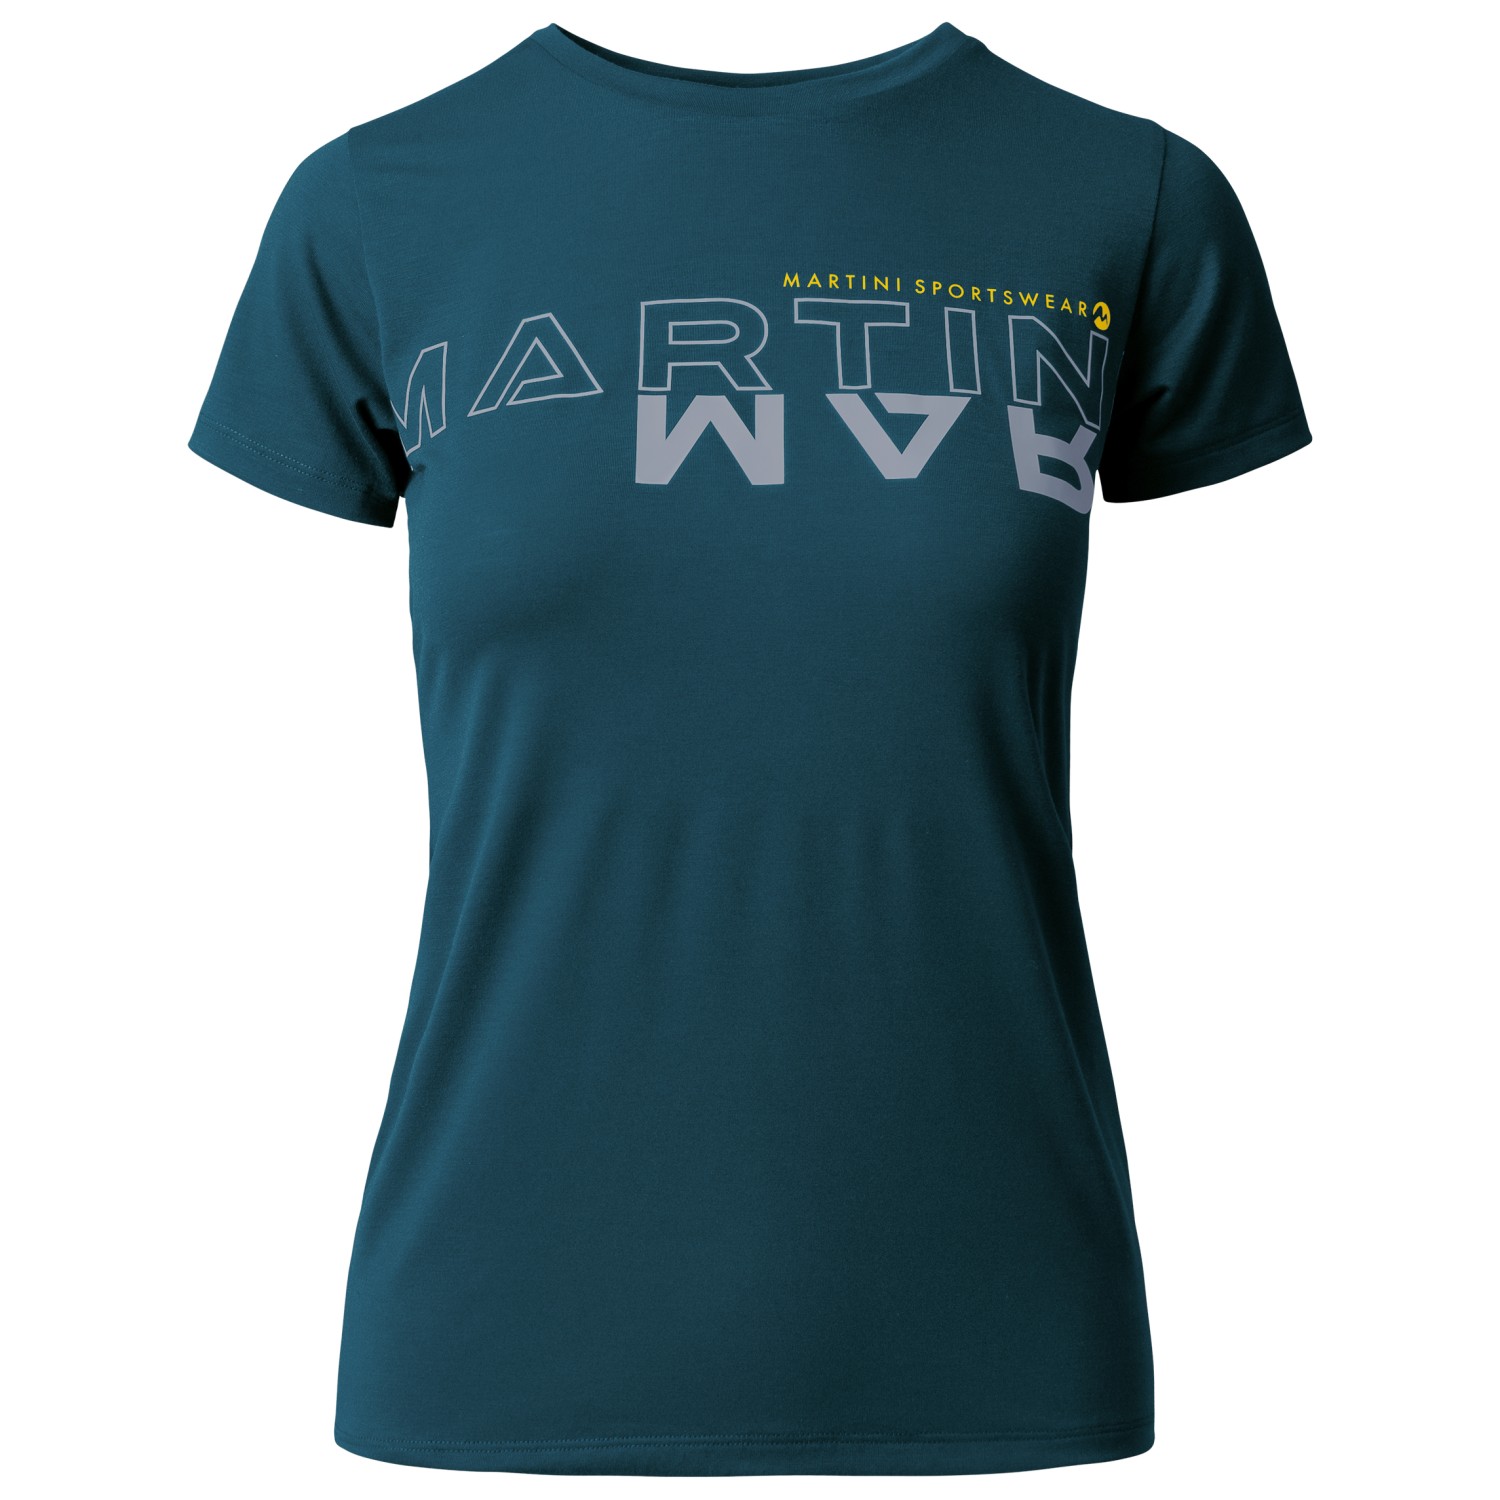 Функциональная рубашка Martini Women's Hillclimb Shirt, цвет poseidon